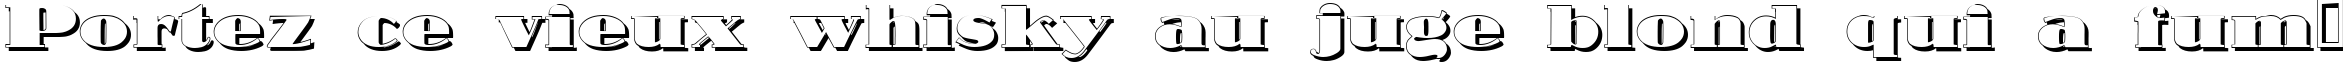 Пример написания шрифтом Nubian Shadow текста на французском